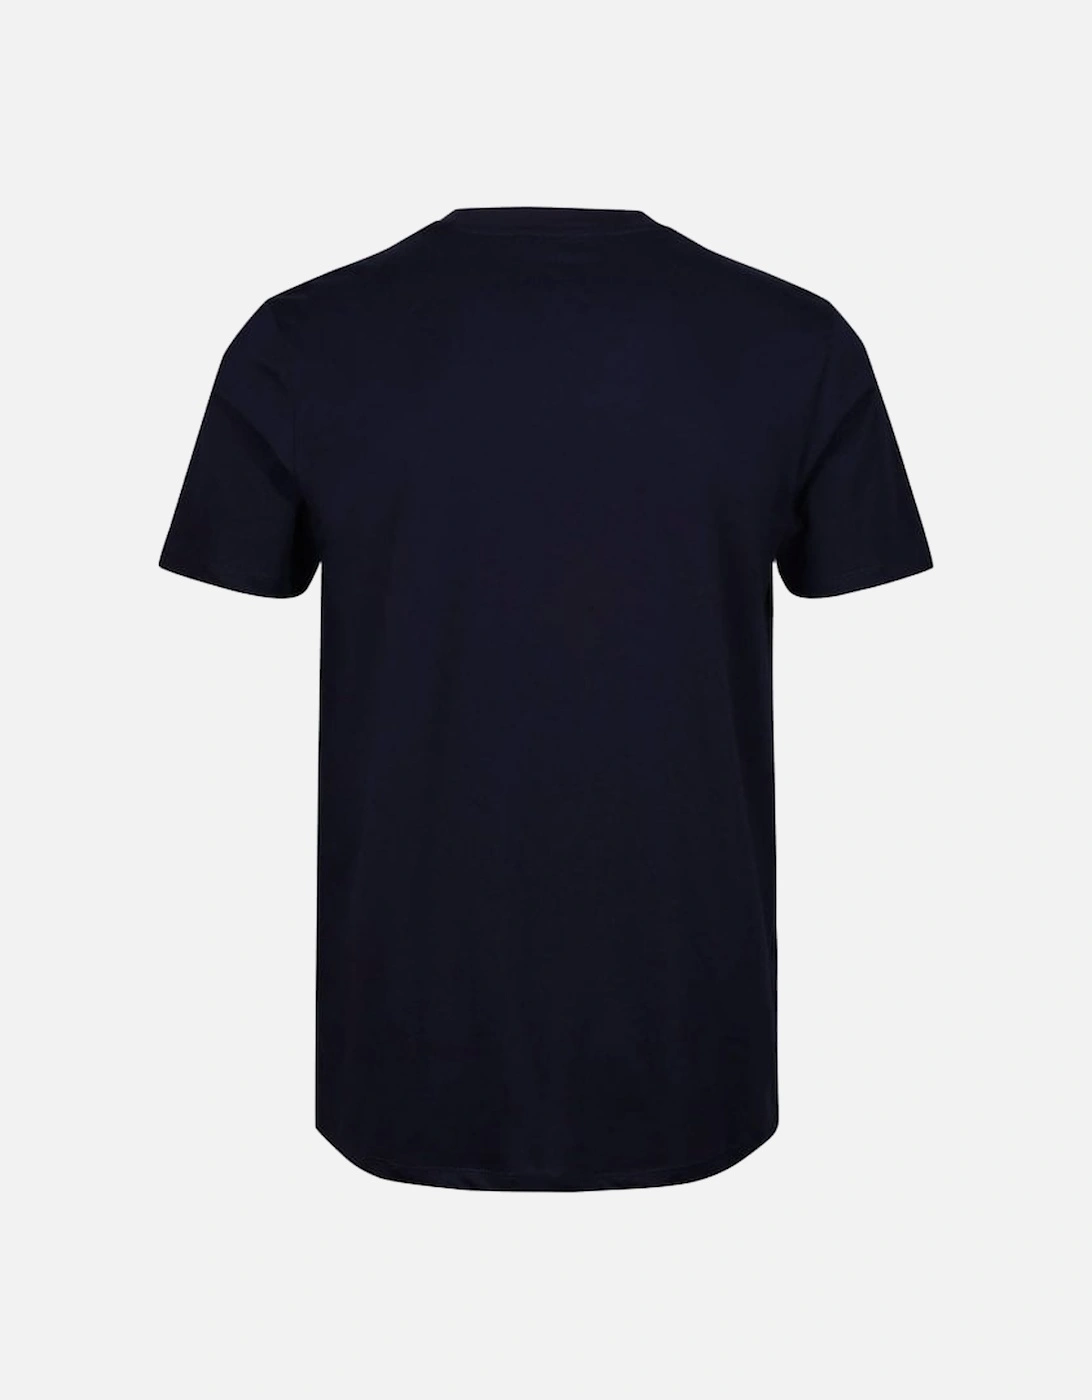 Luke Mainline Premium T Shirt Lion Logo Dark Navy